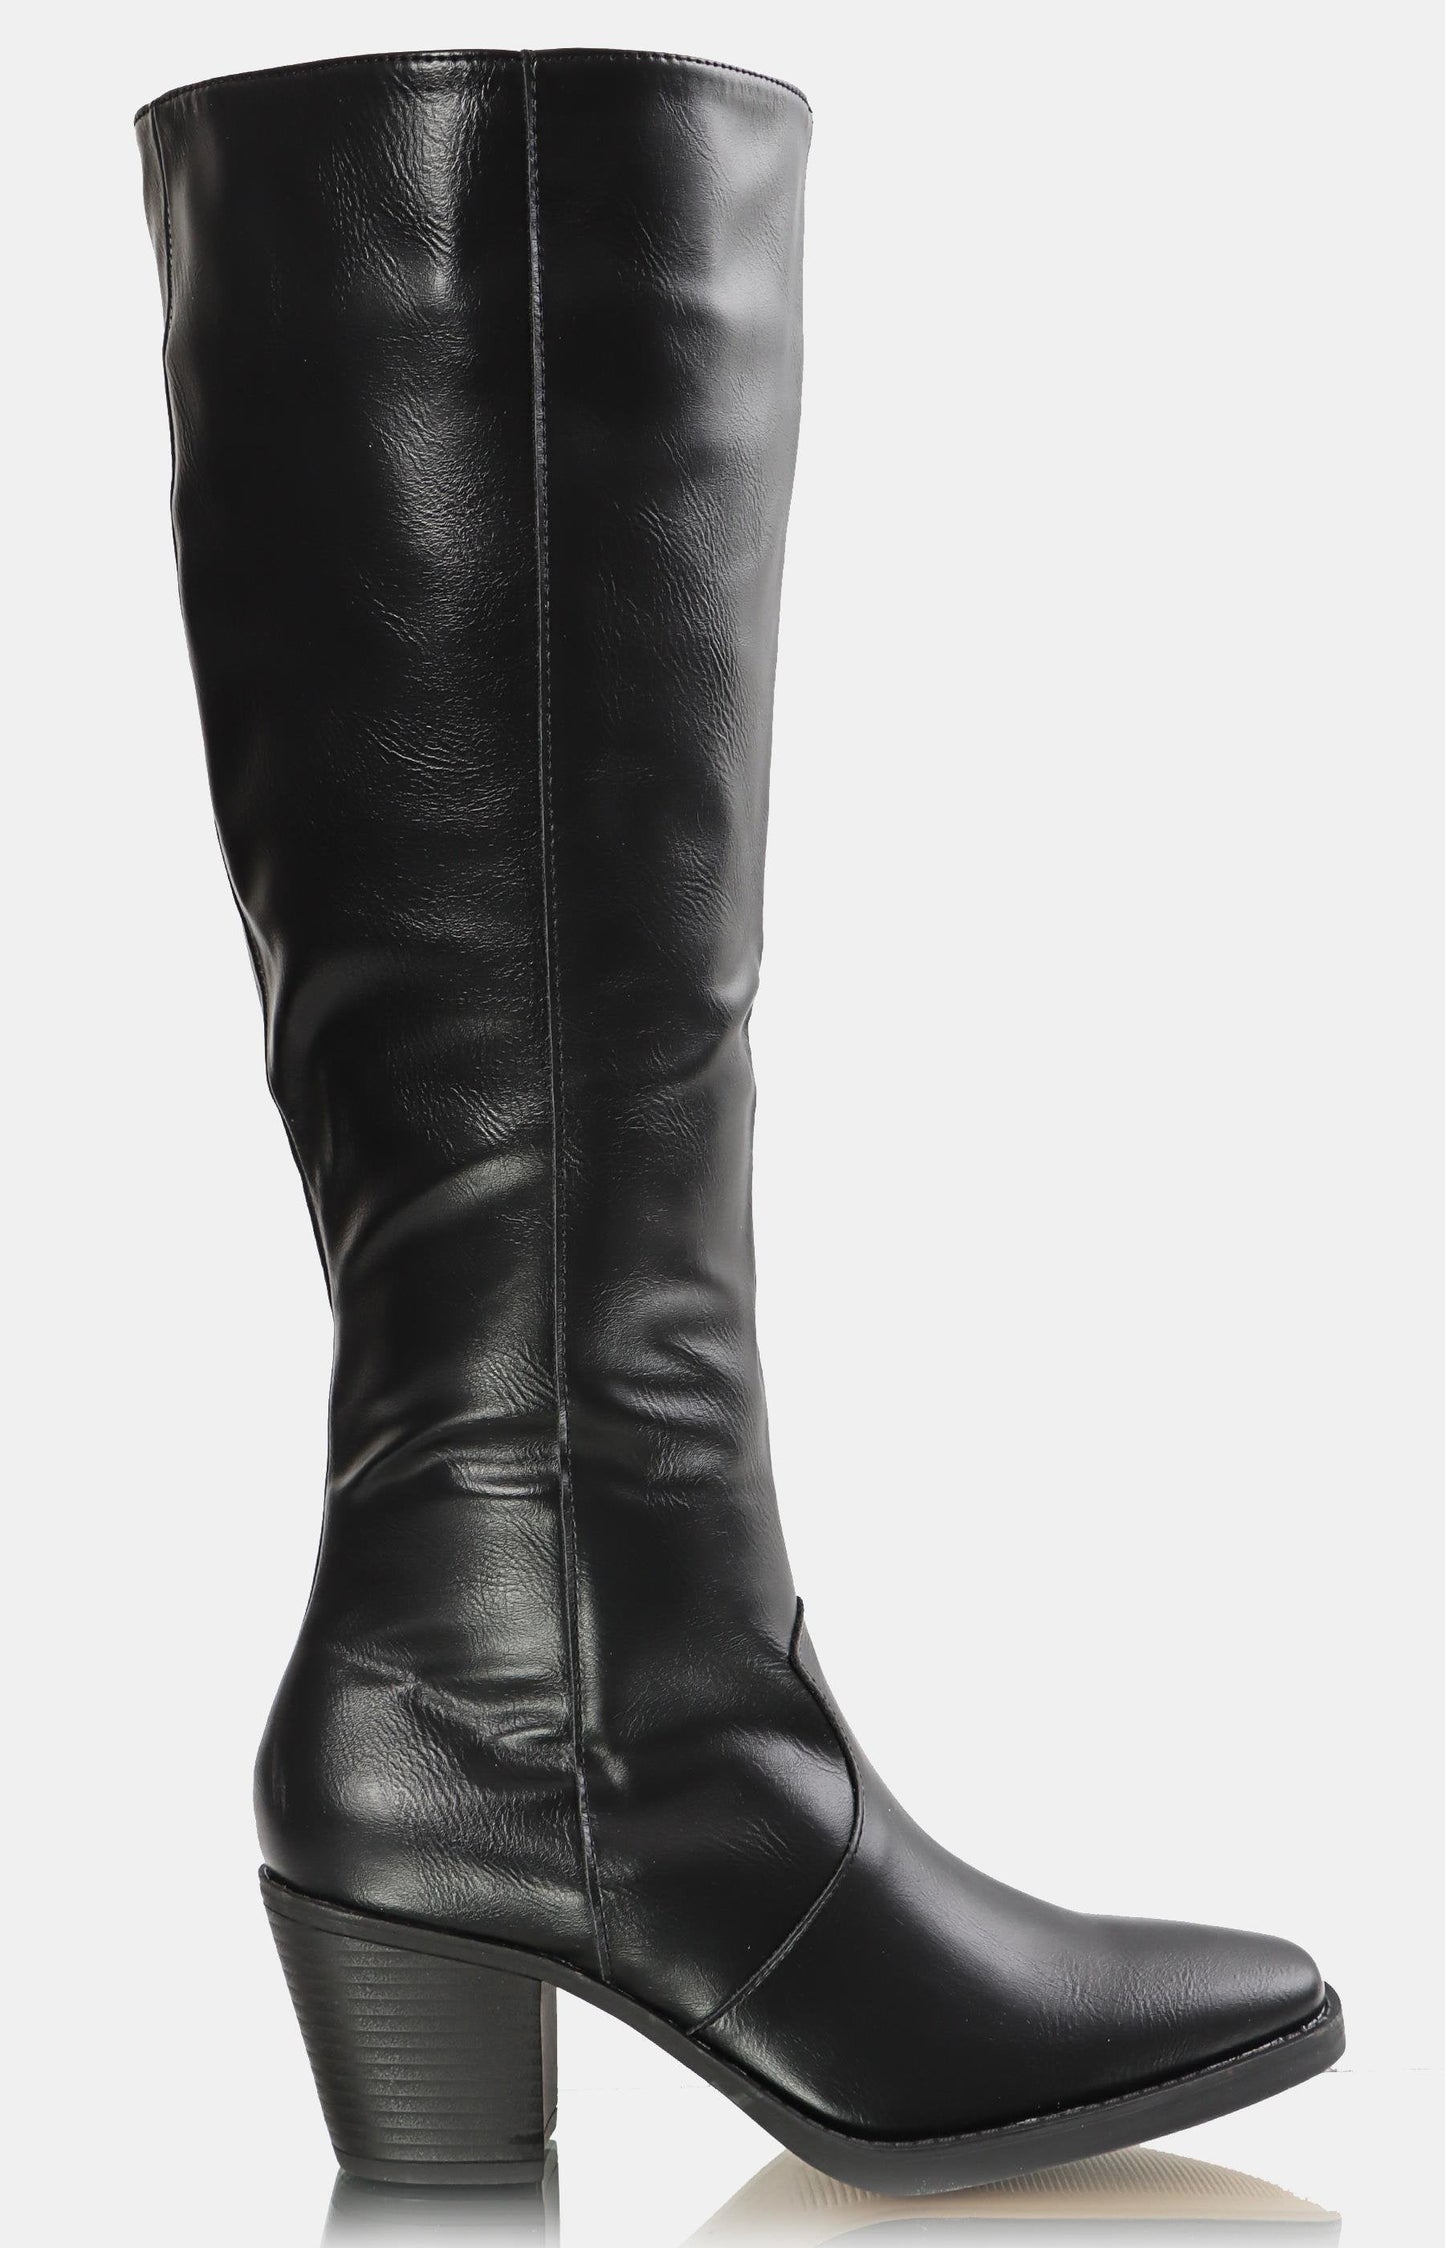 Ladies Knee High Boots - Black